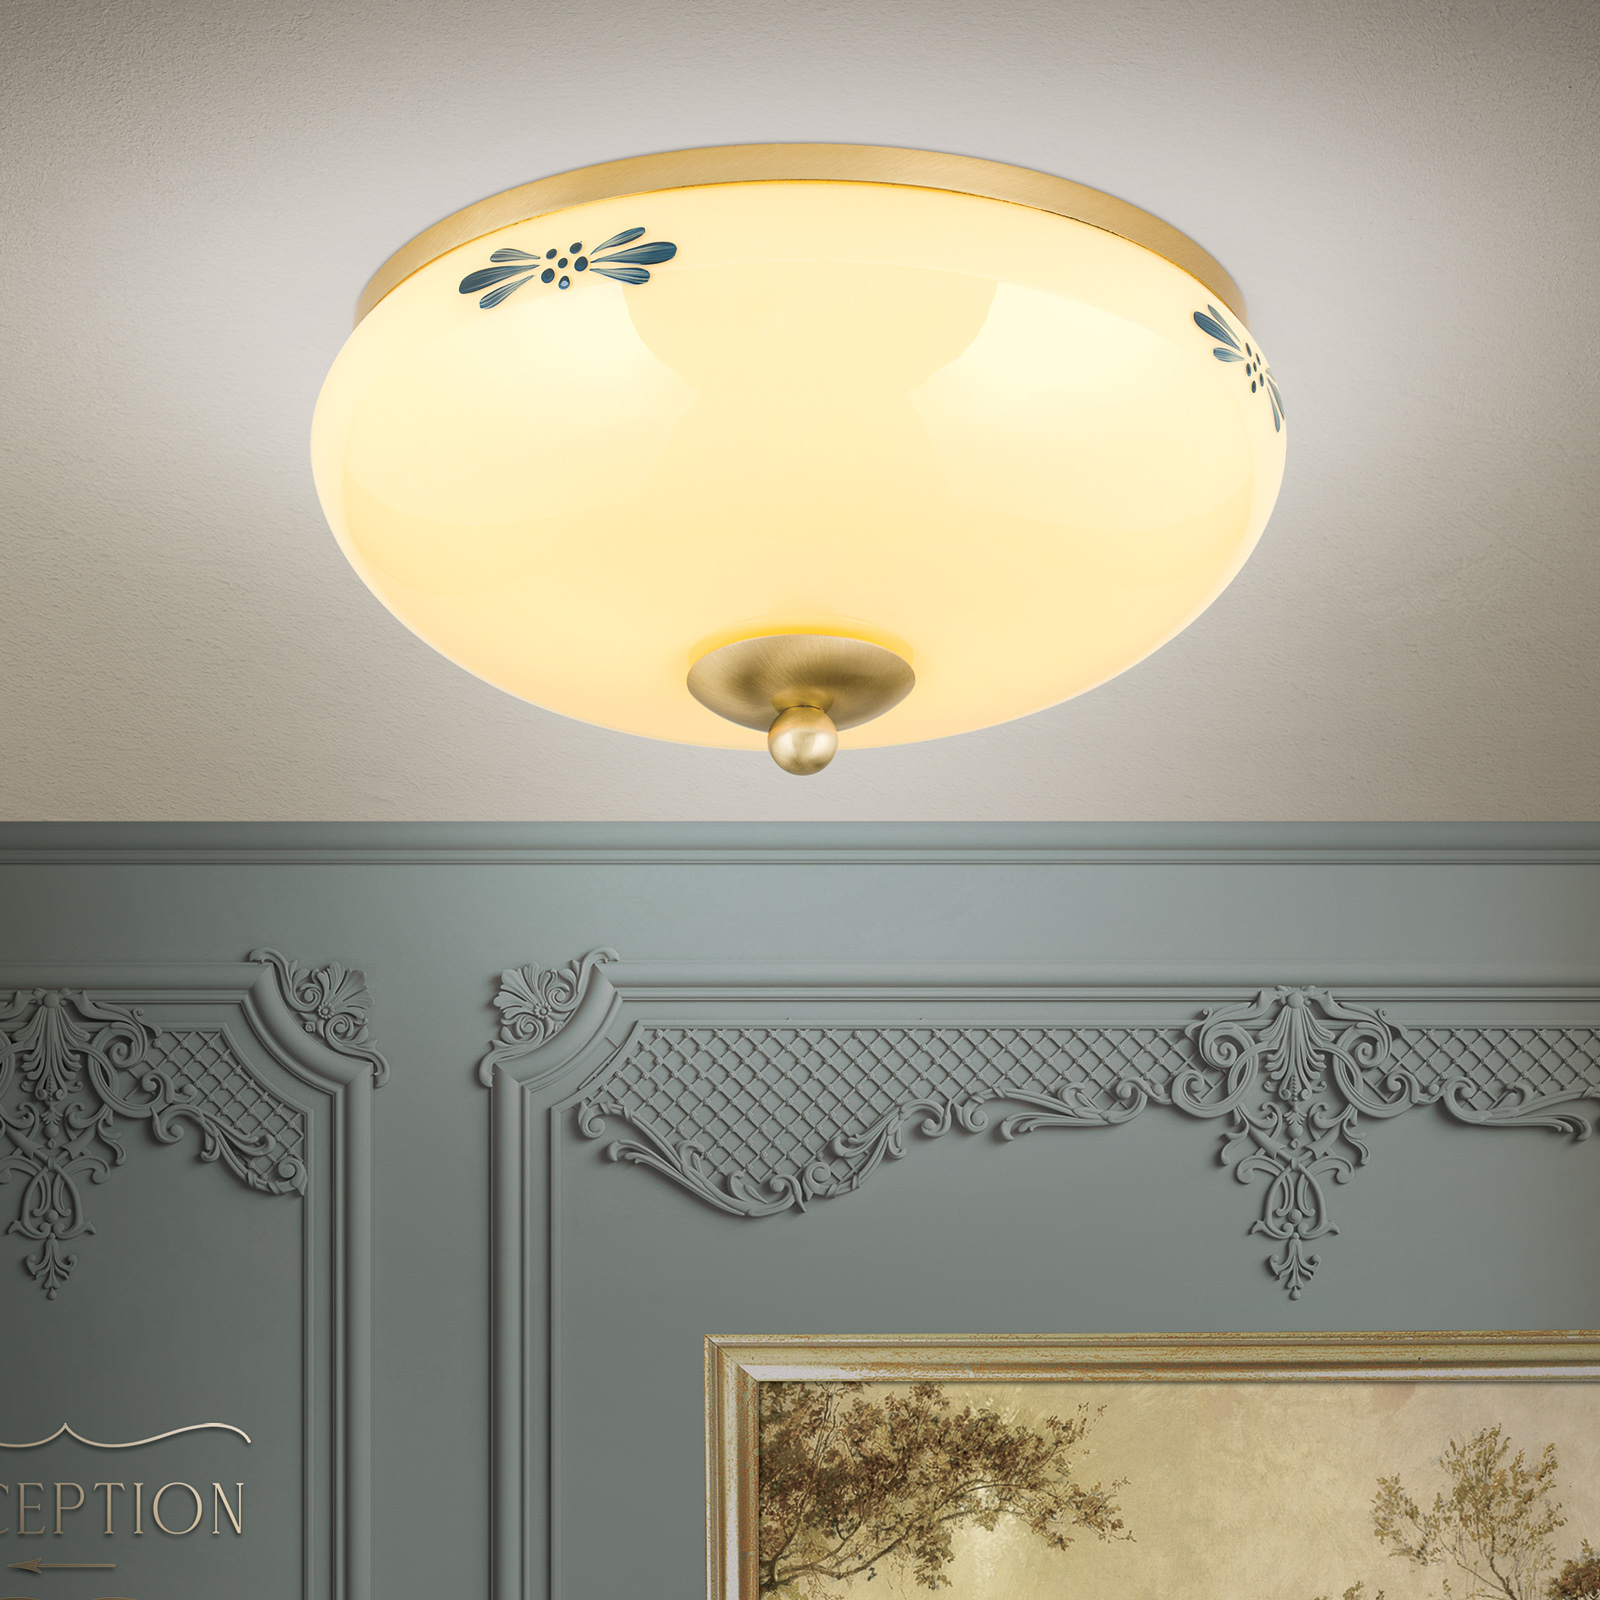 Landhaus ceiling lamp brass cream blue Ø 28 cm